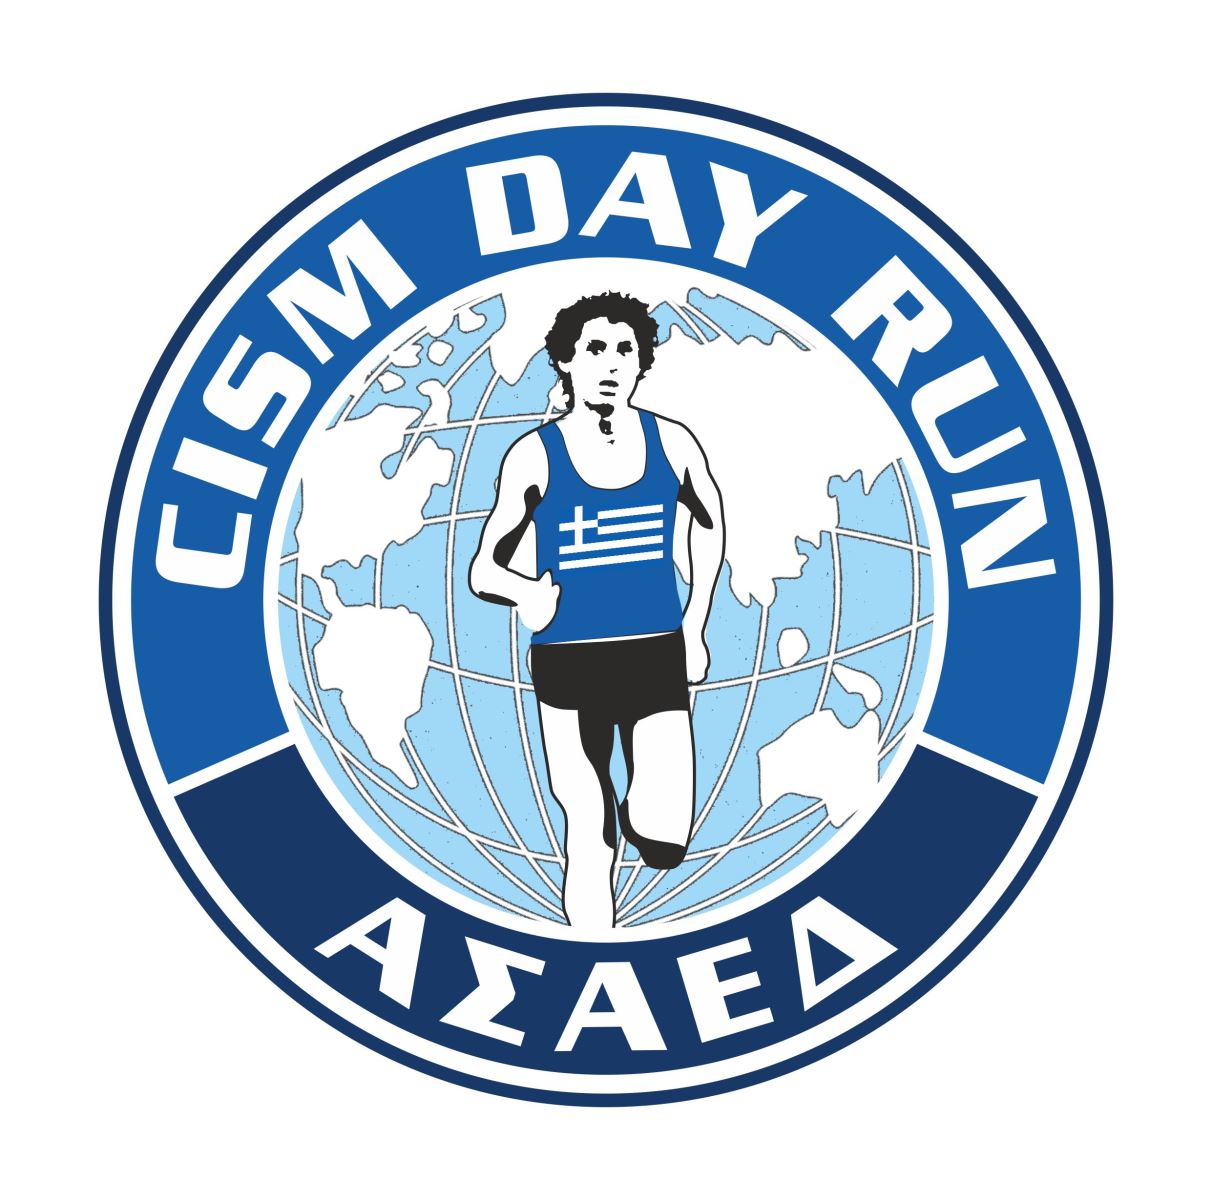 Cism Day Run 2020 - 10km